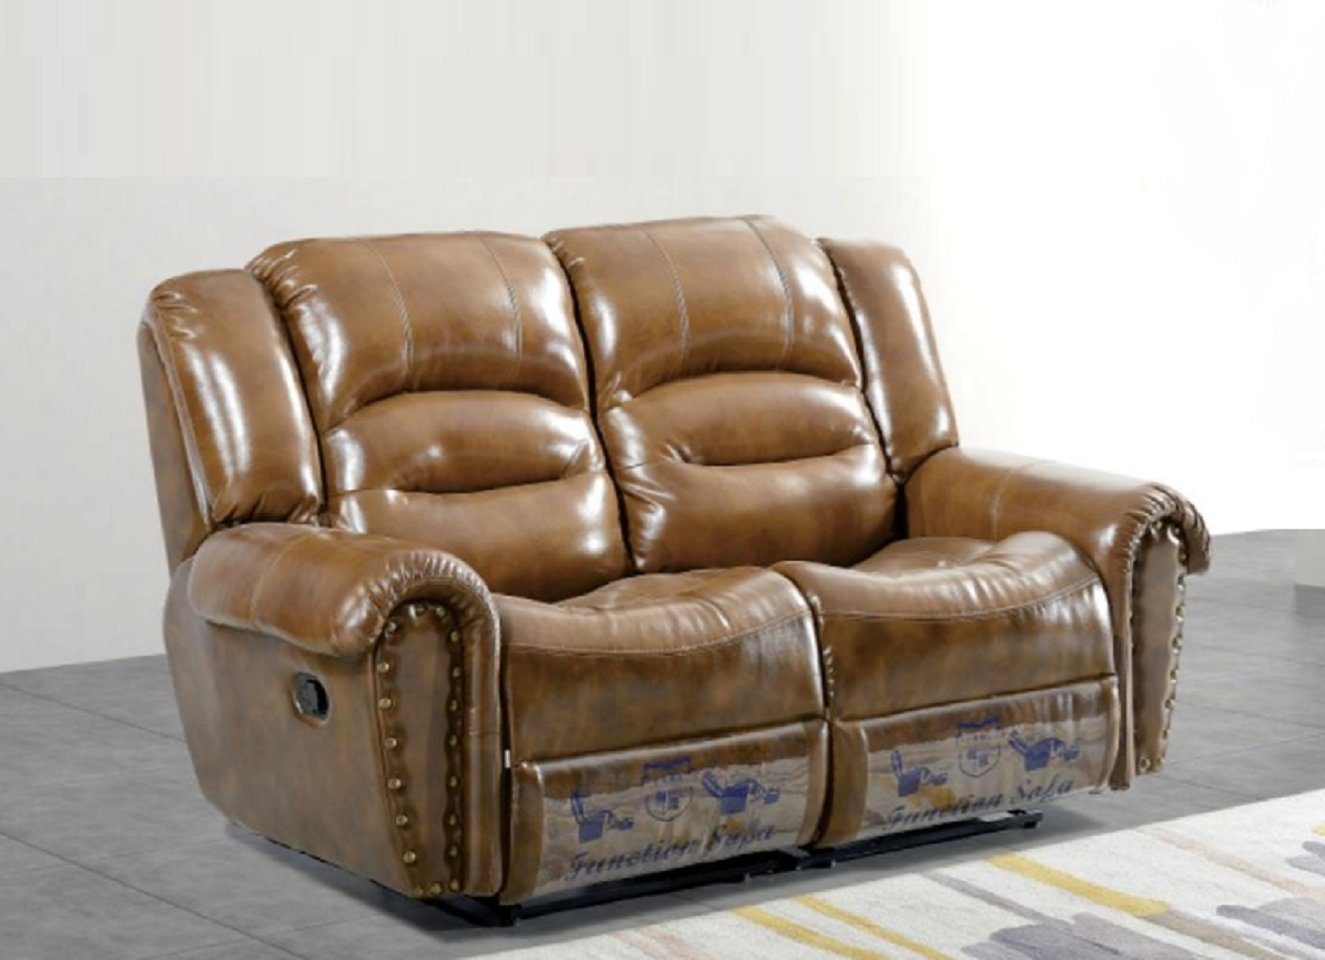 2-Sitzer Daoulas Kino sofa Relaxfunktion Getränkehalter neu ausst